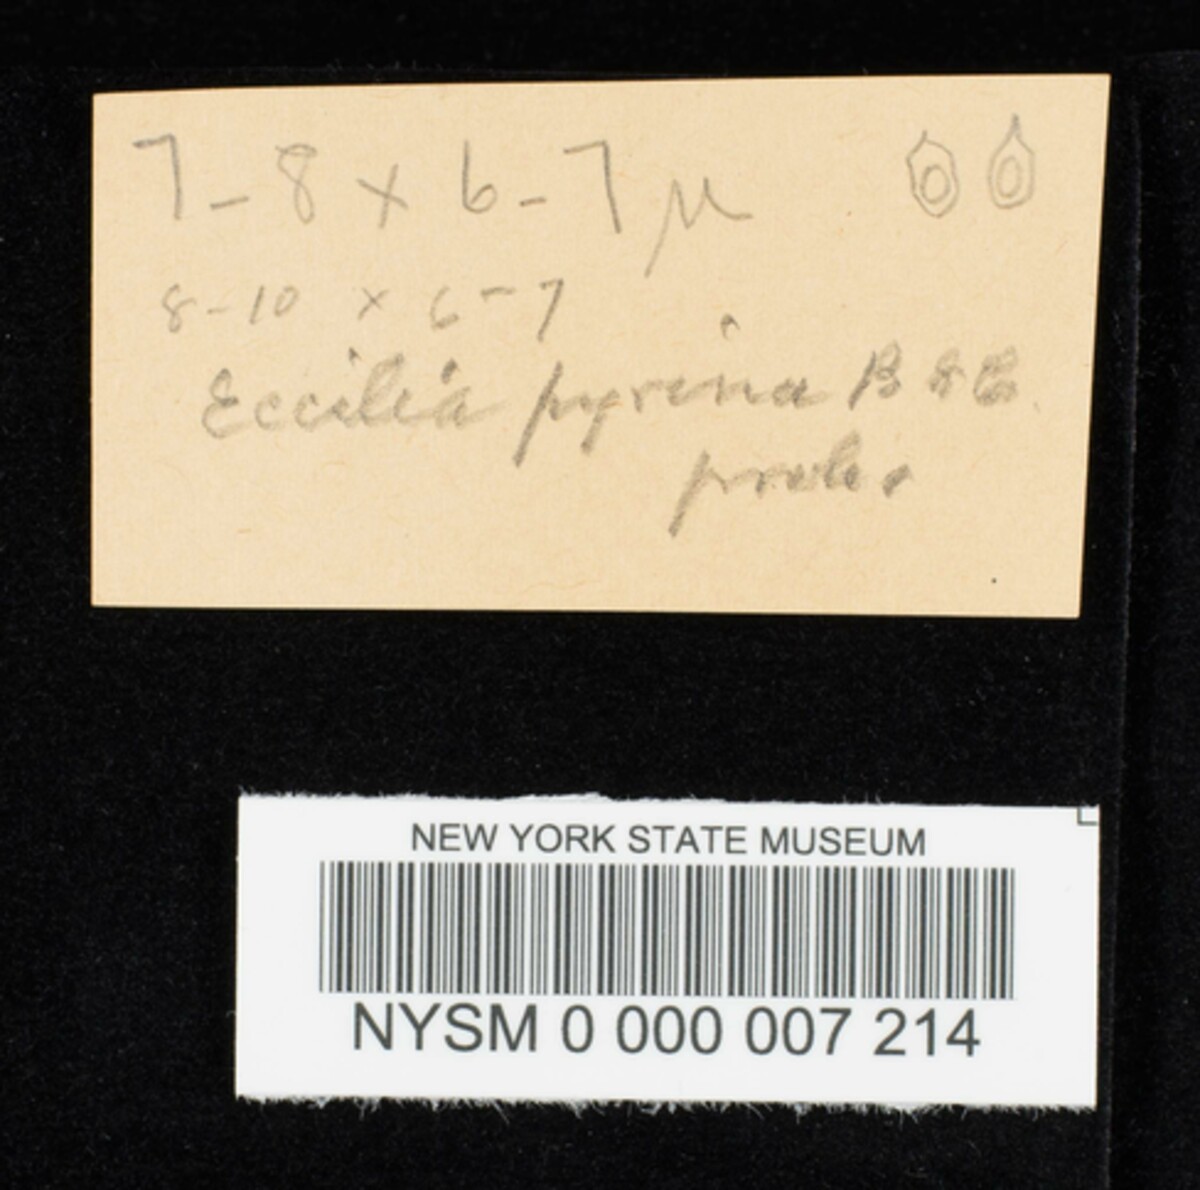 Eccilia pyrina image